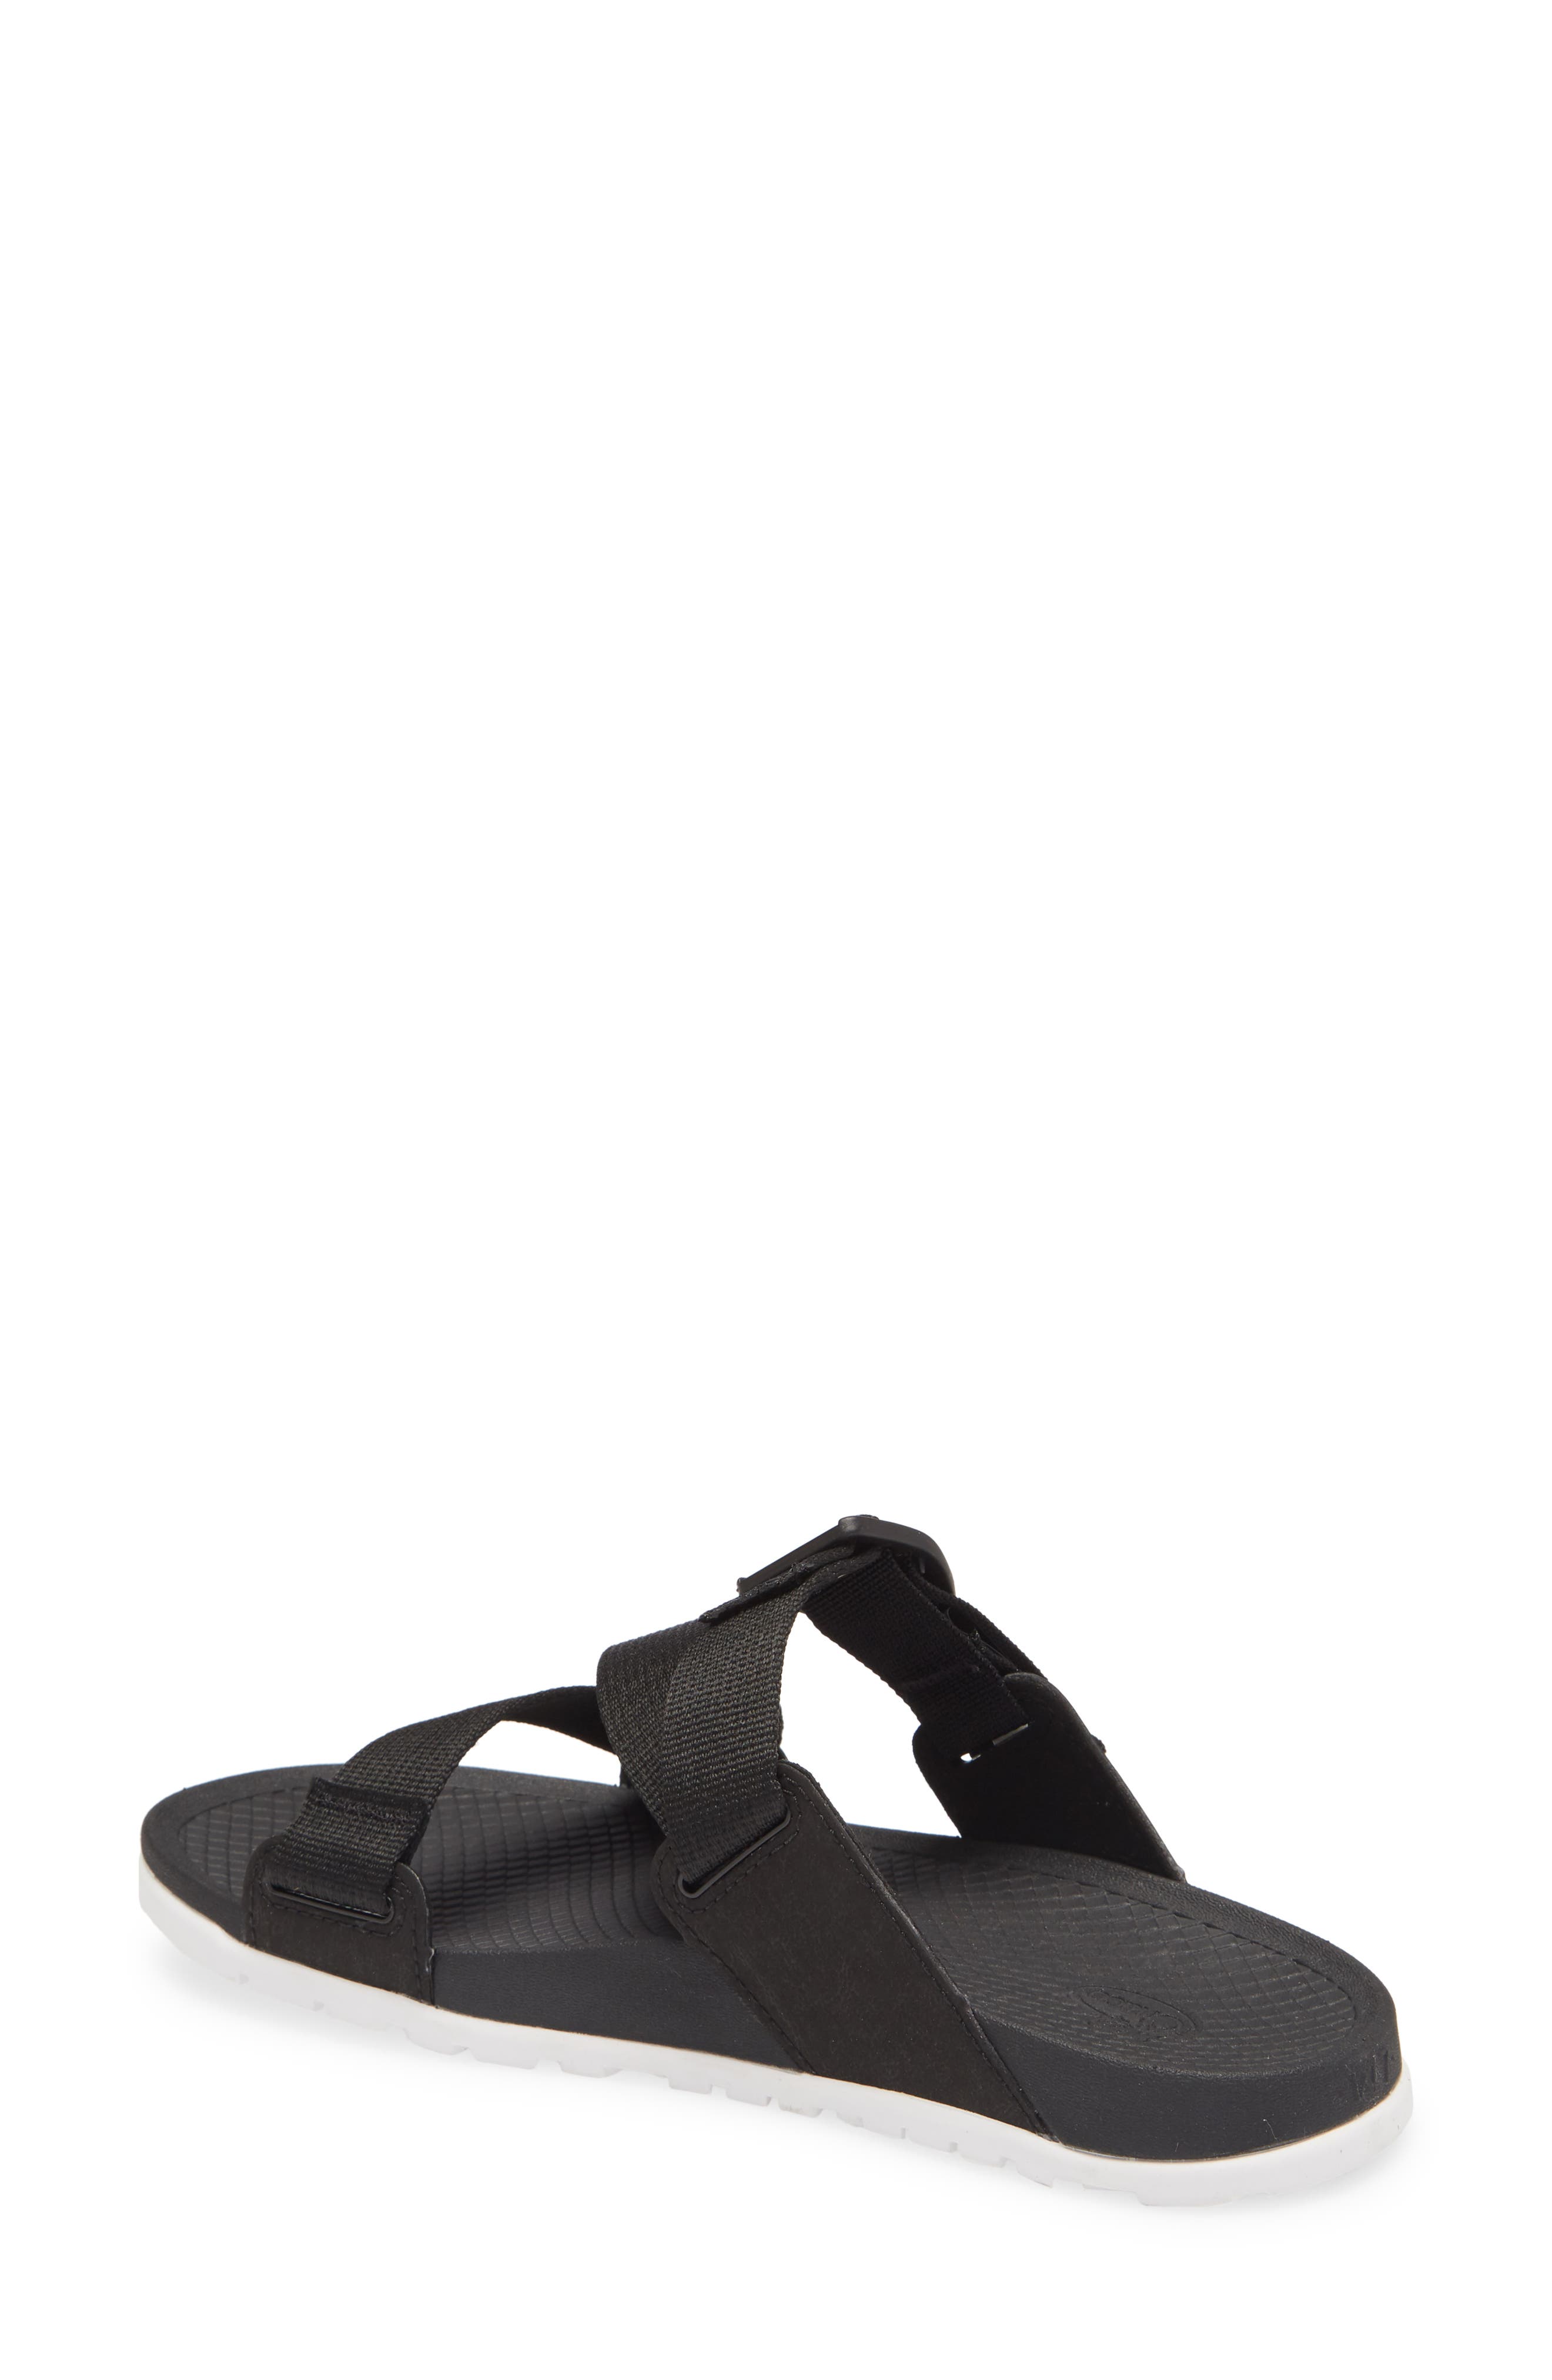 ChacoChaco Women's Shoes Lowdown Slide Fabric Open Toe Casual Slide Sandals 